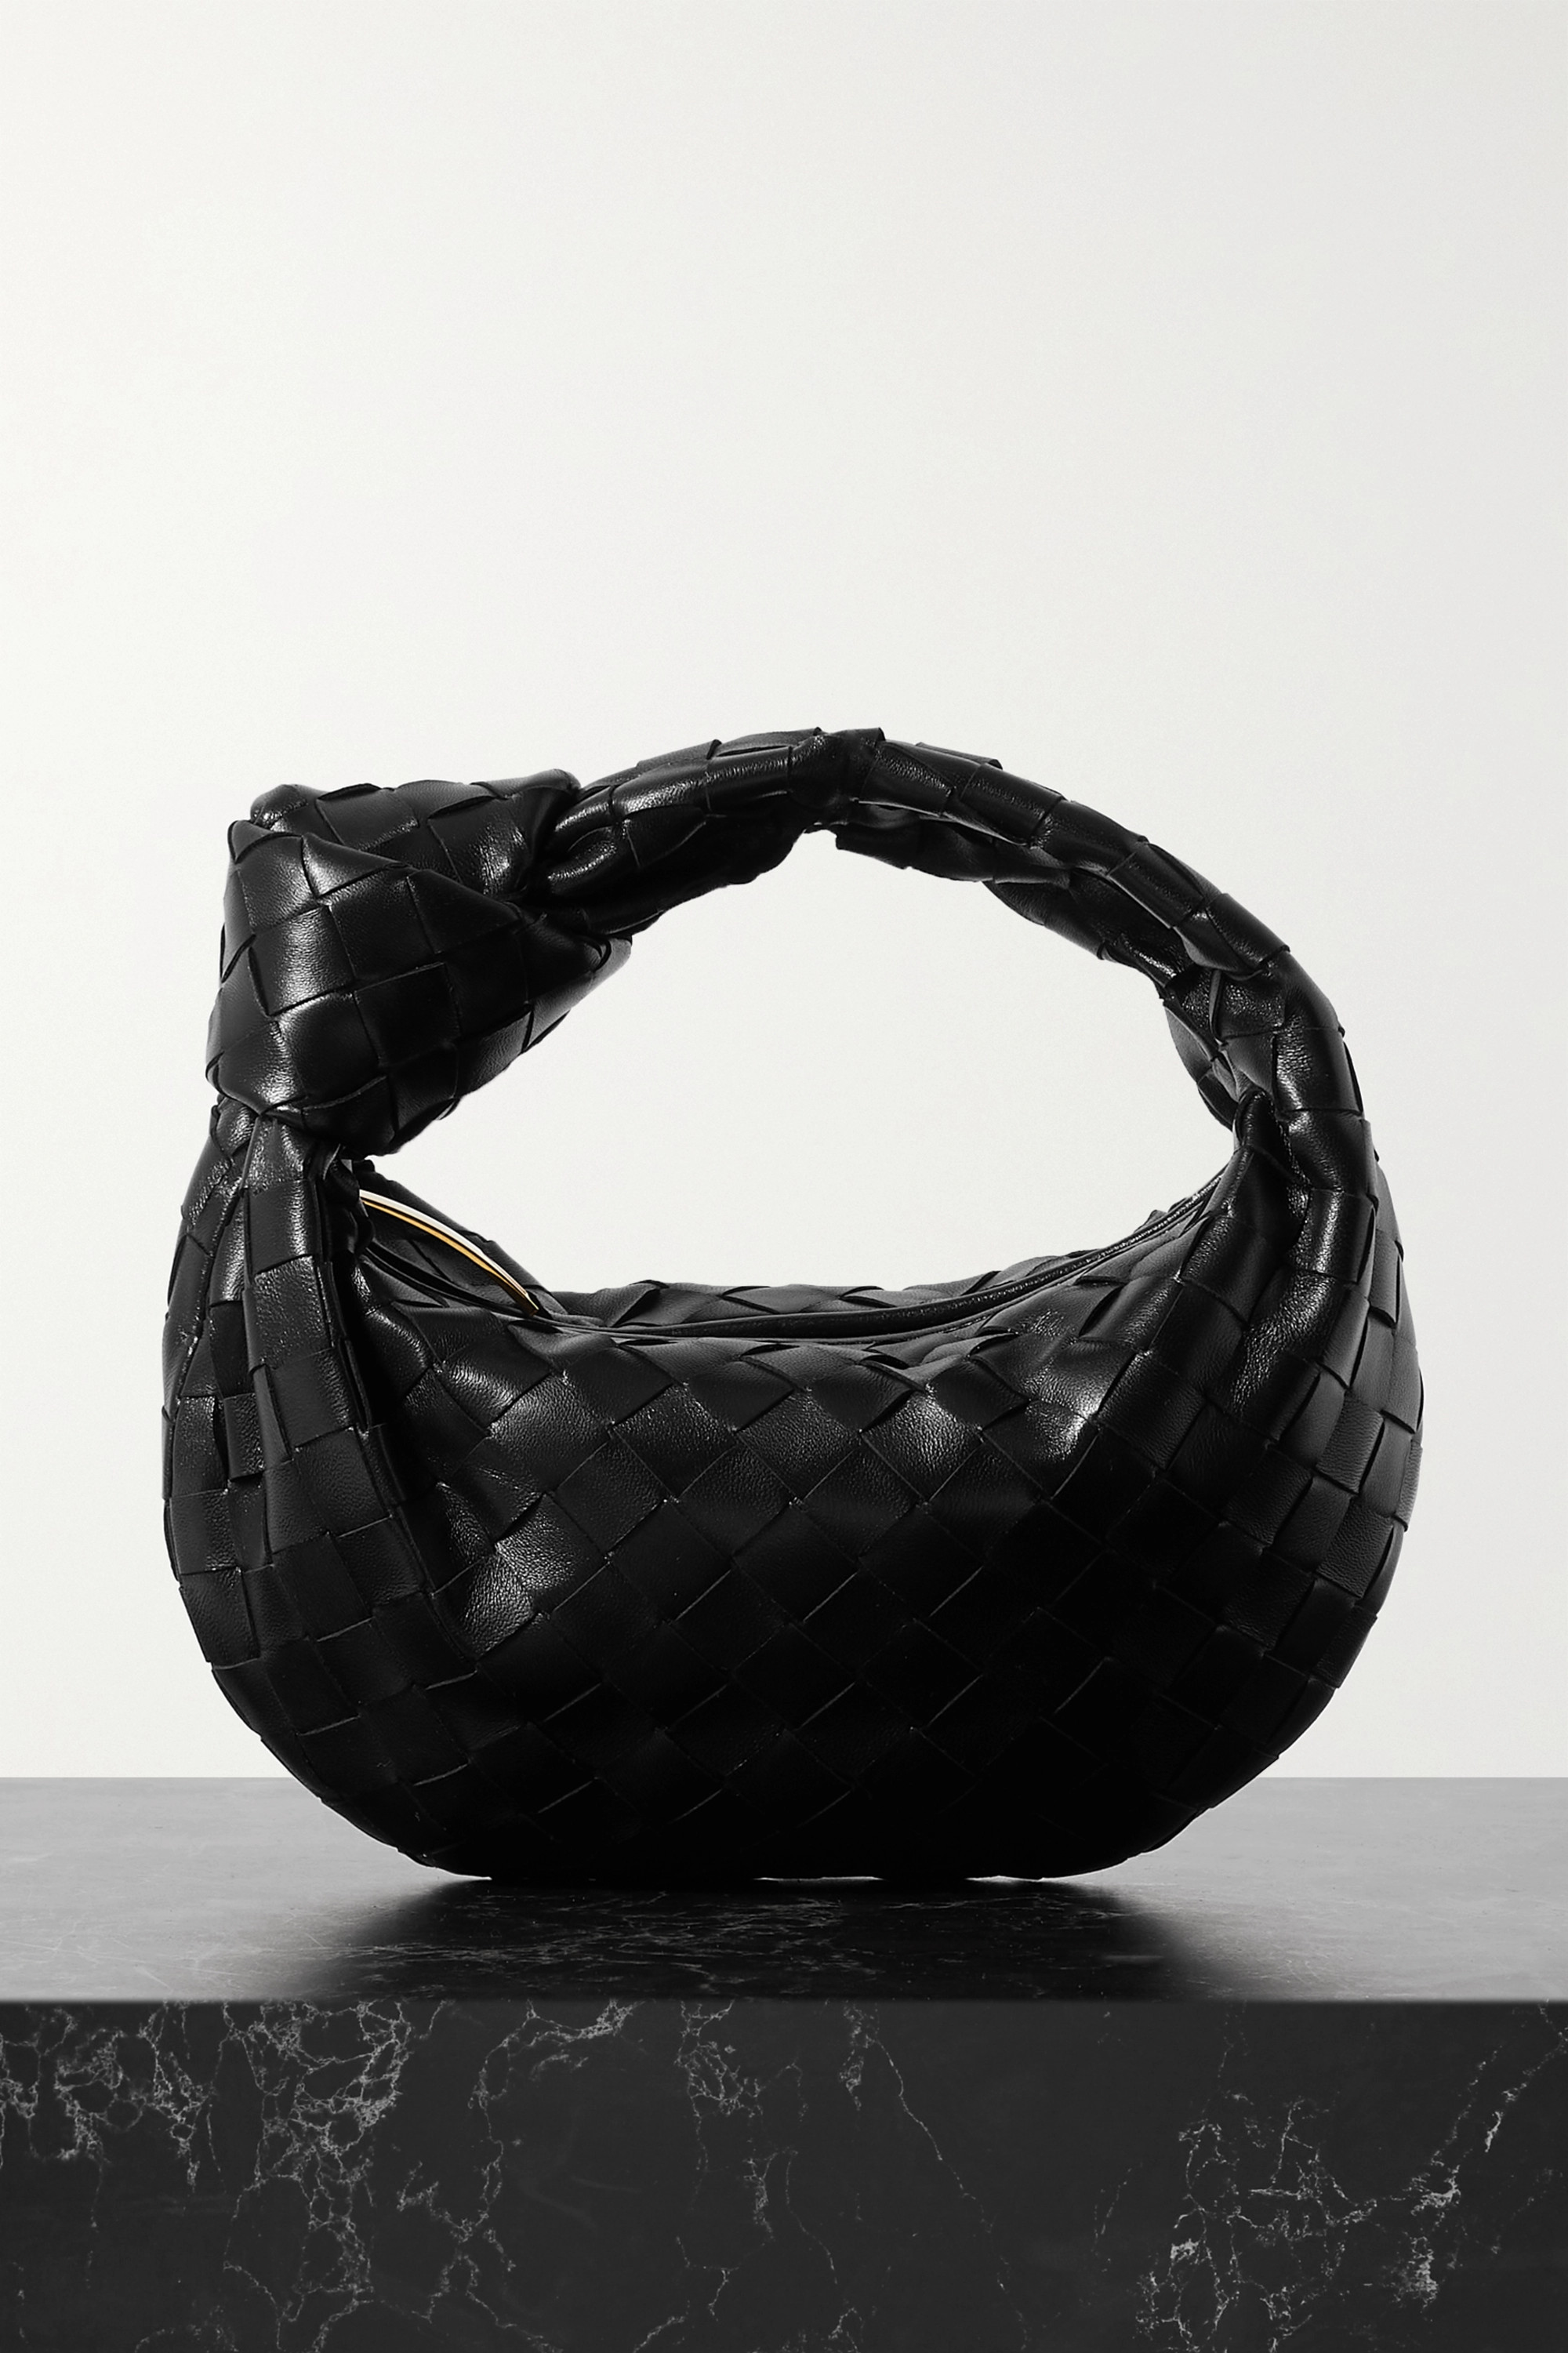 The New Jodie Spaghetti Bag By Bottega Veneta Is A Photographed